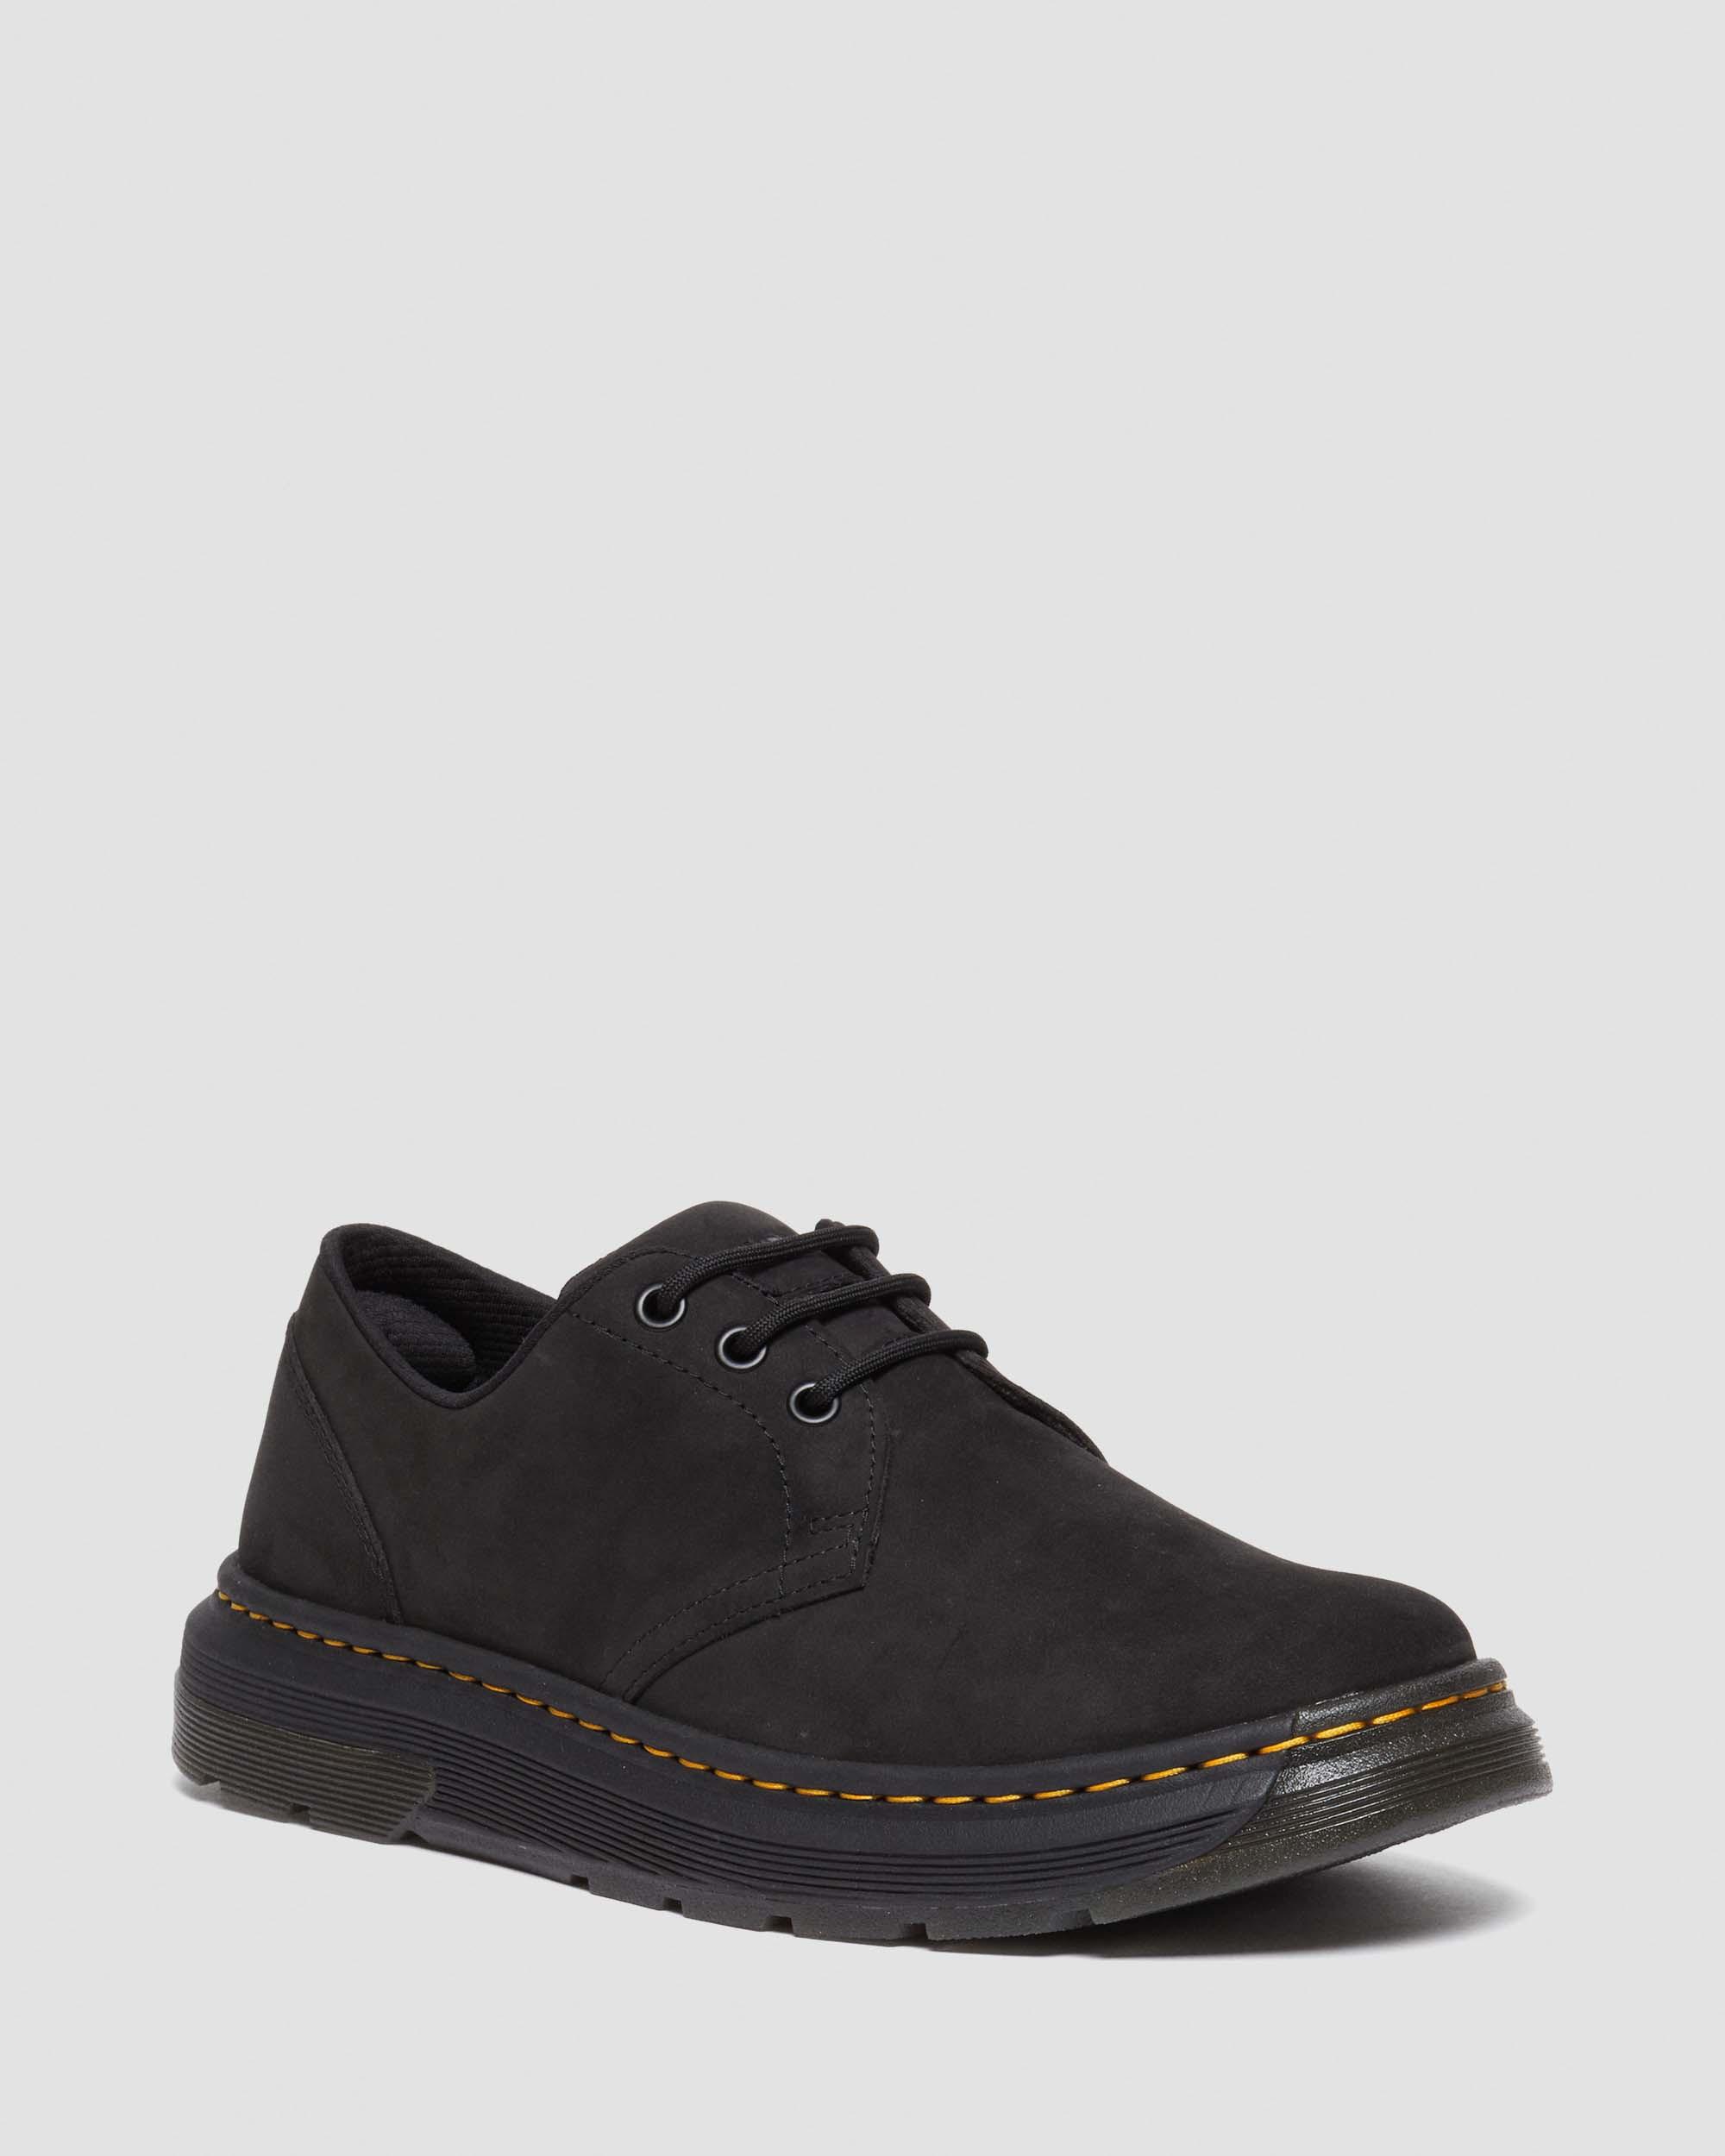 Dante Brando Leather Casual Shoes in Black | Dr. Martens